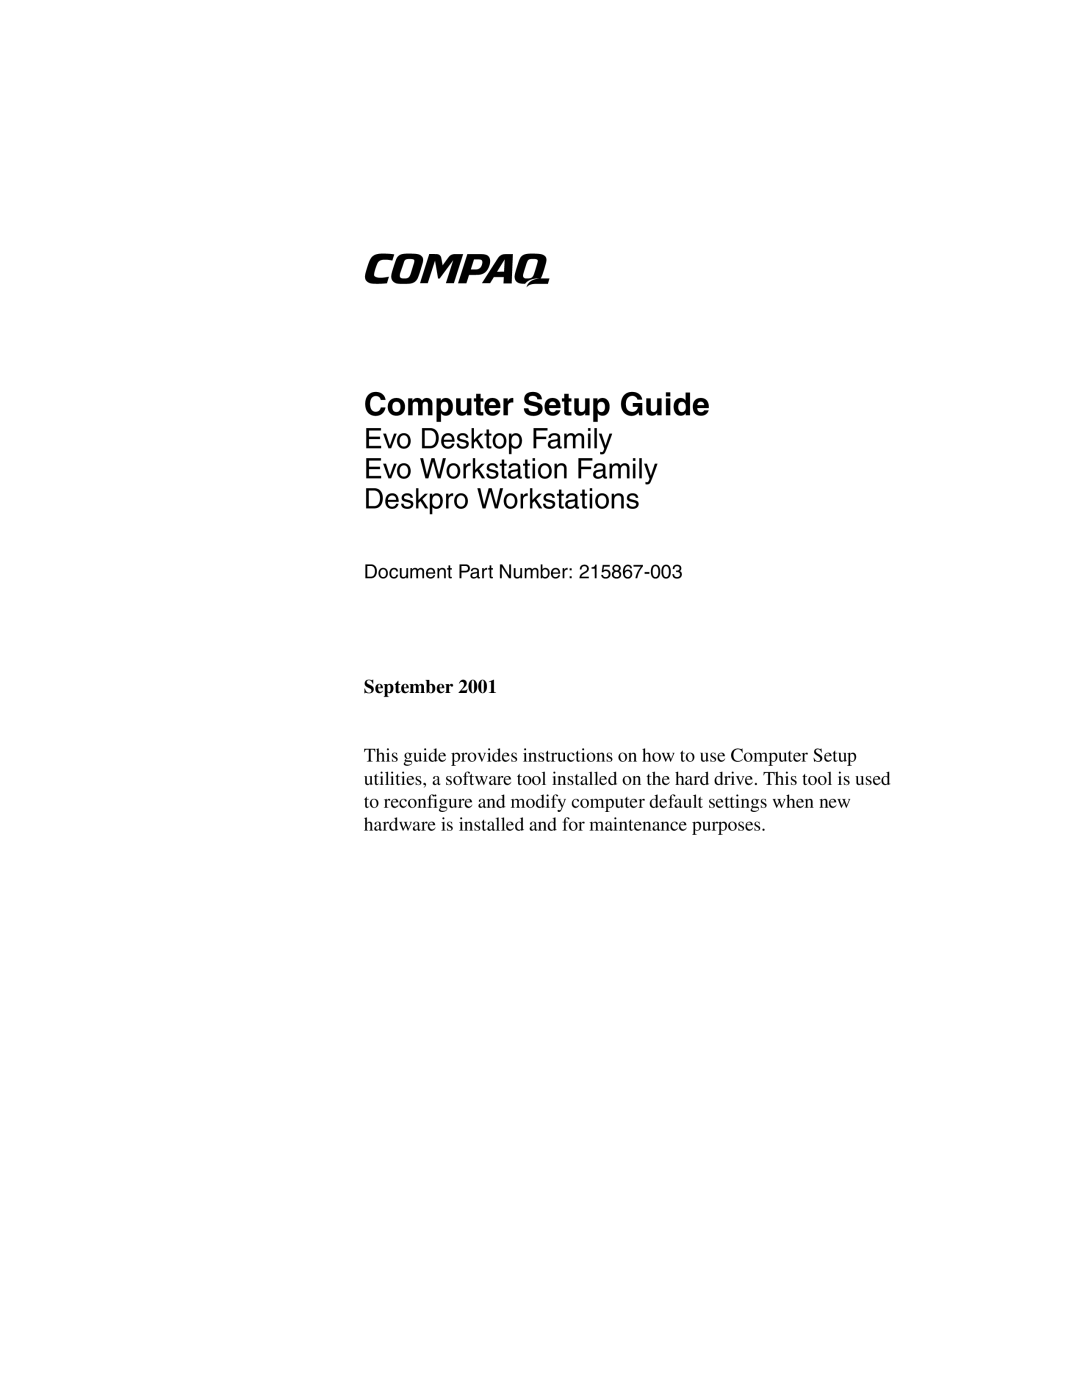 HP D300 manual Computer Setup Guide 